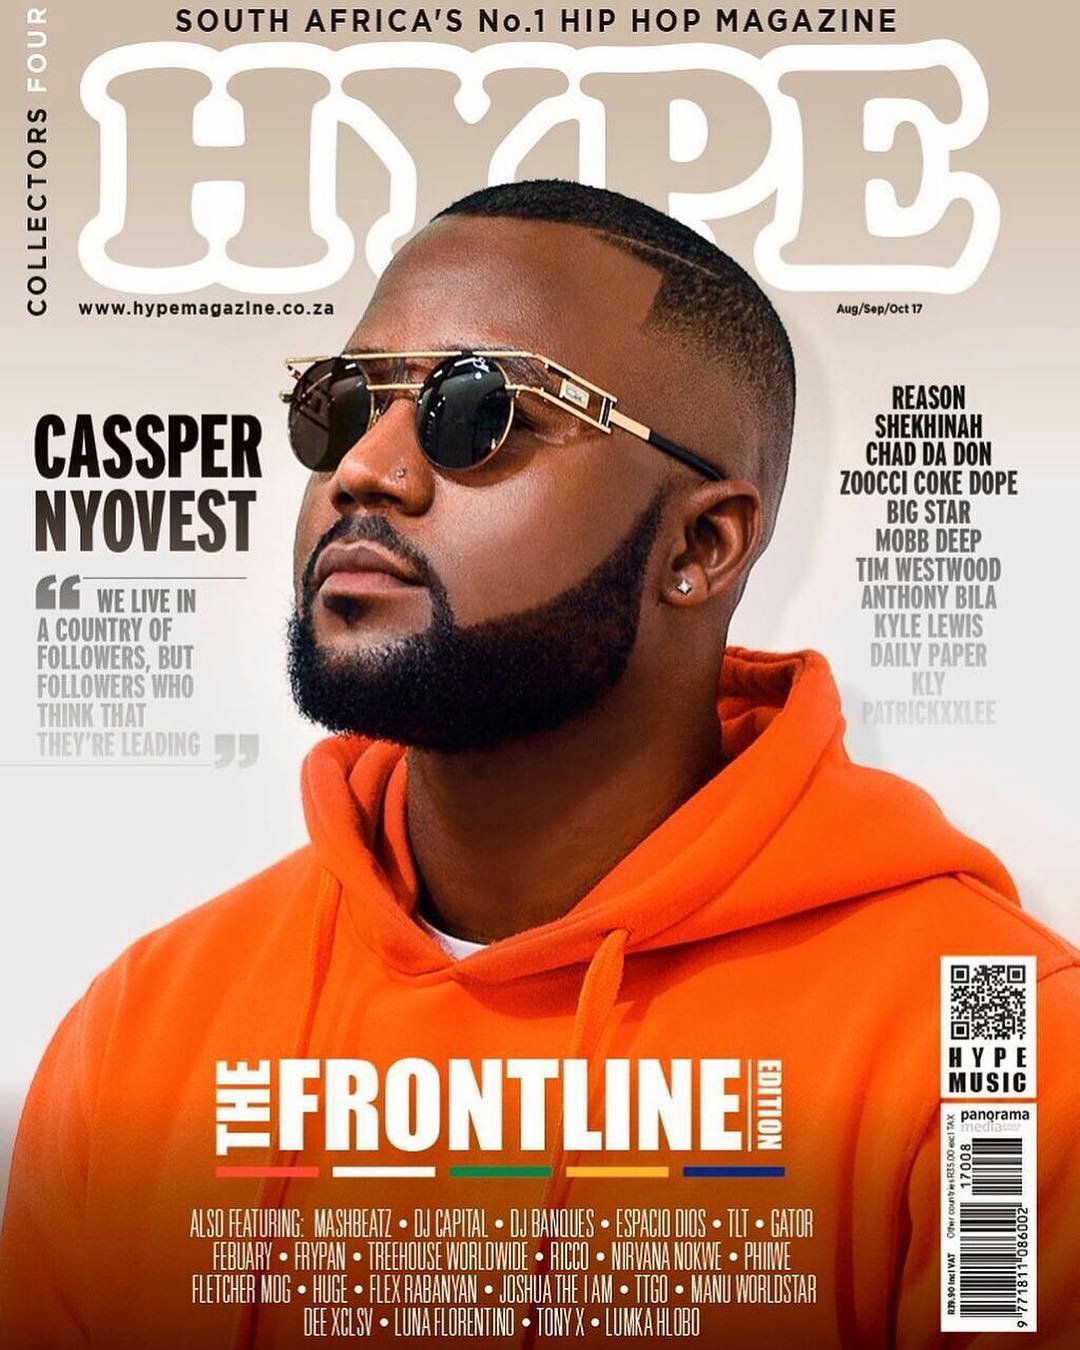 BellaNaija - Cassper Nyovest covers The Frontline Edition of Hype Magazine